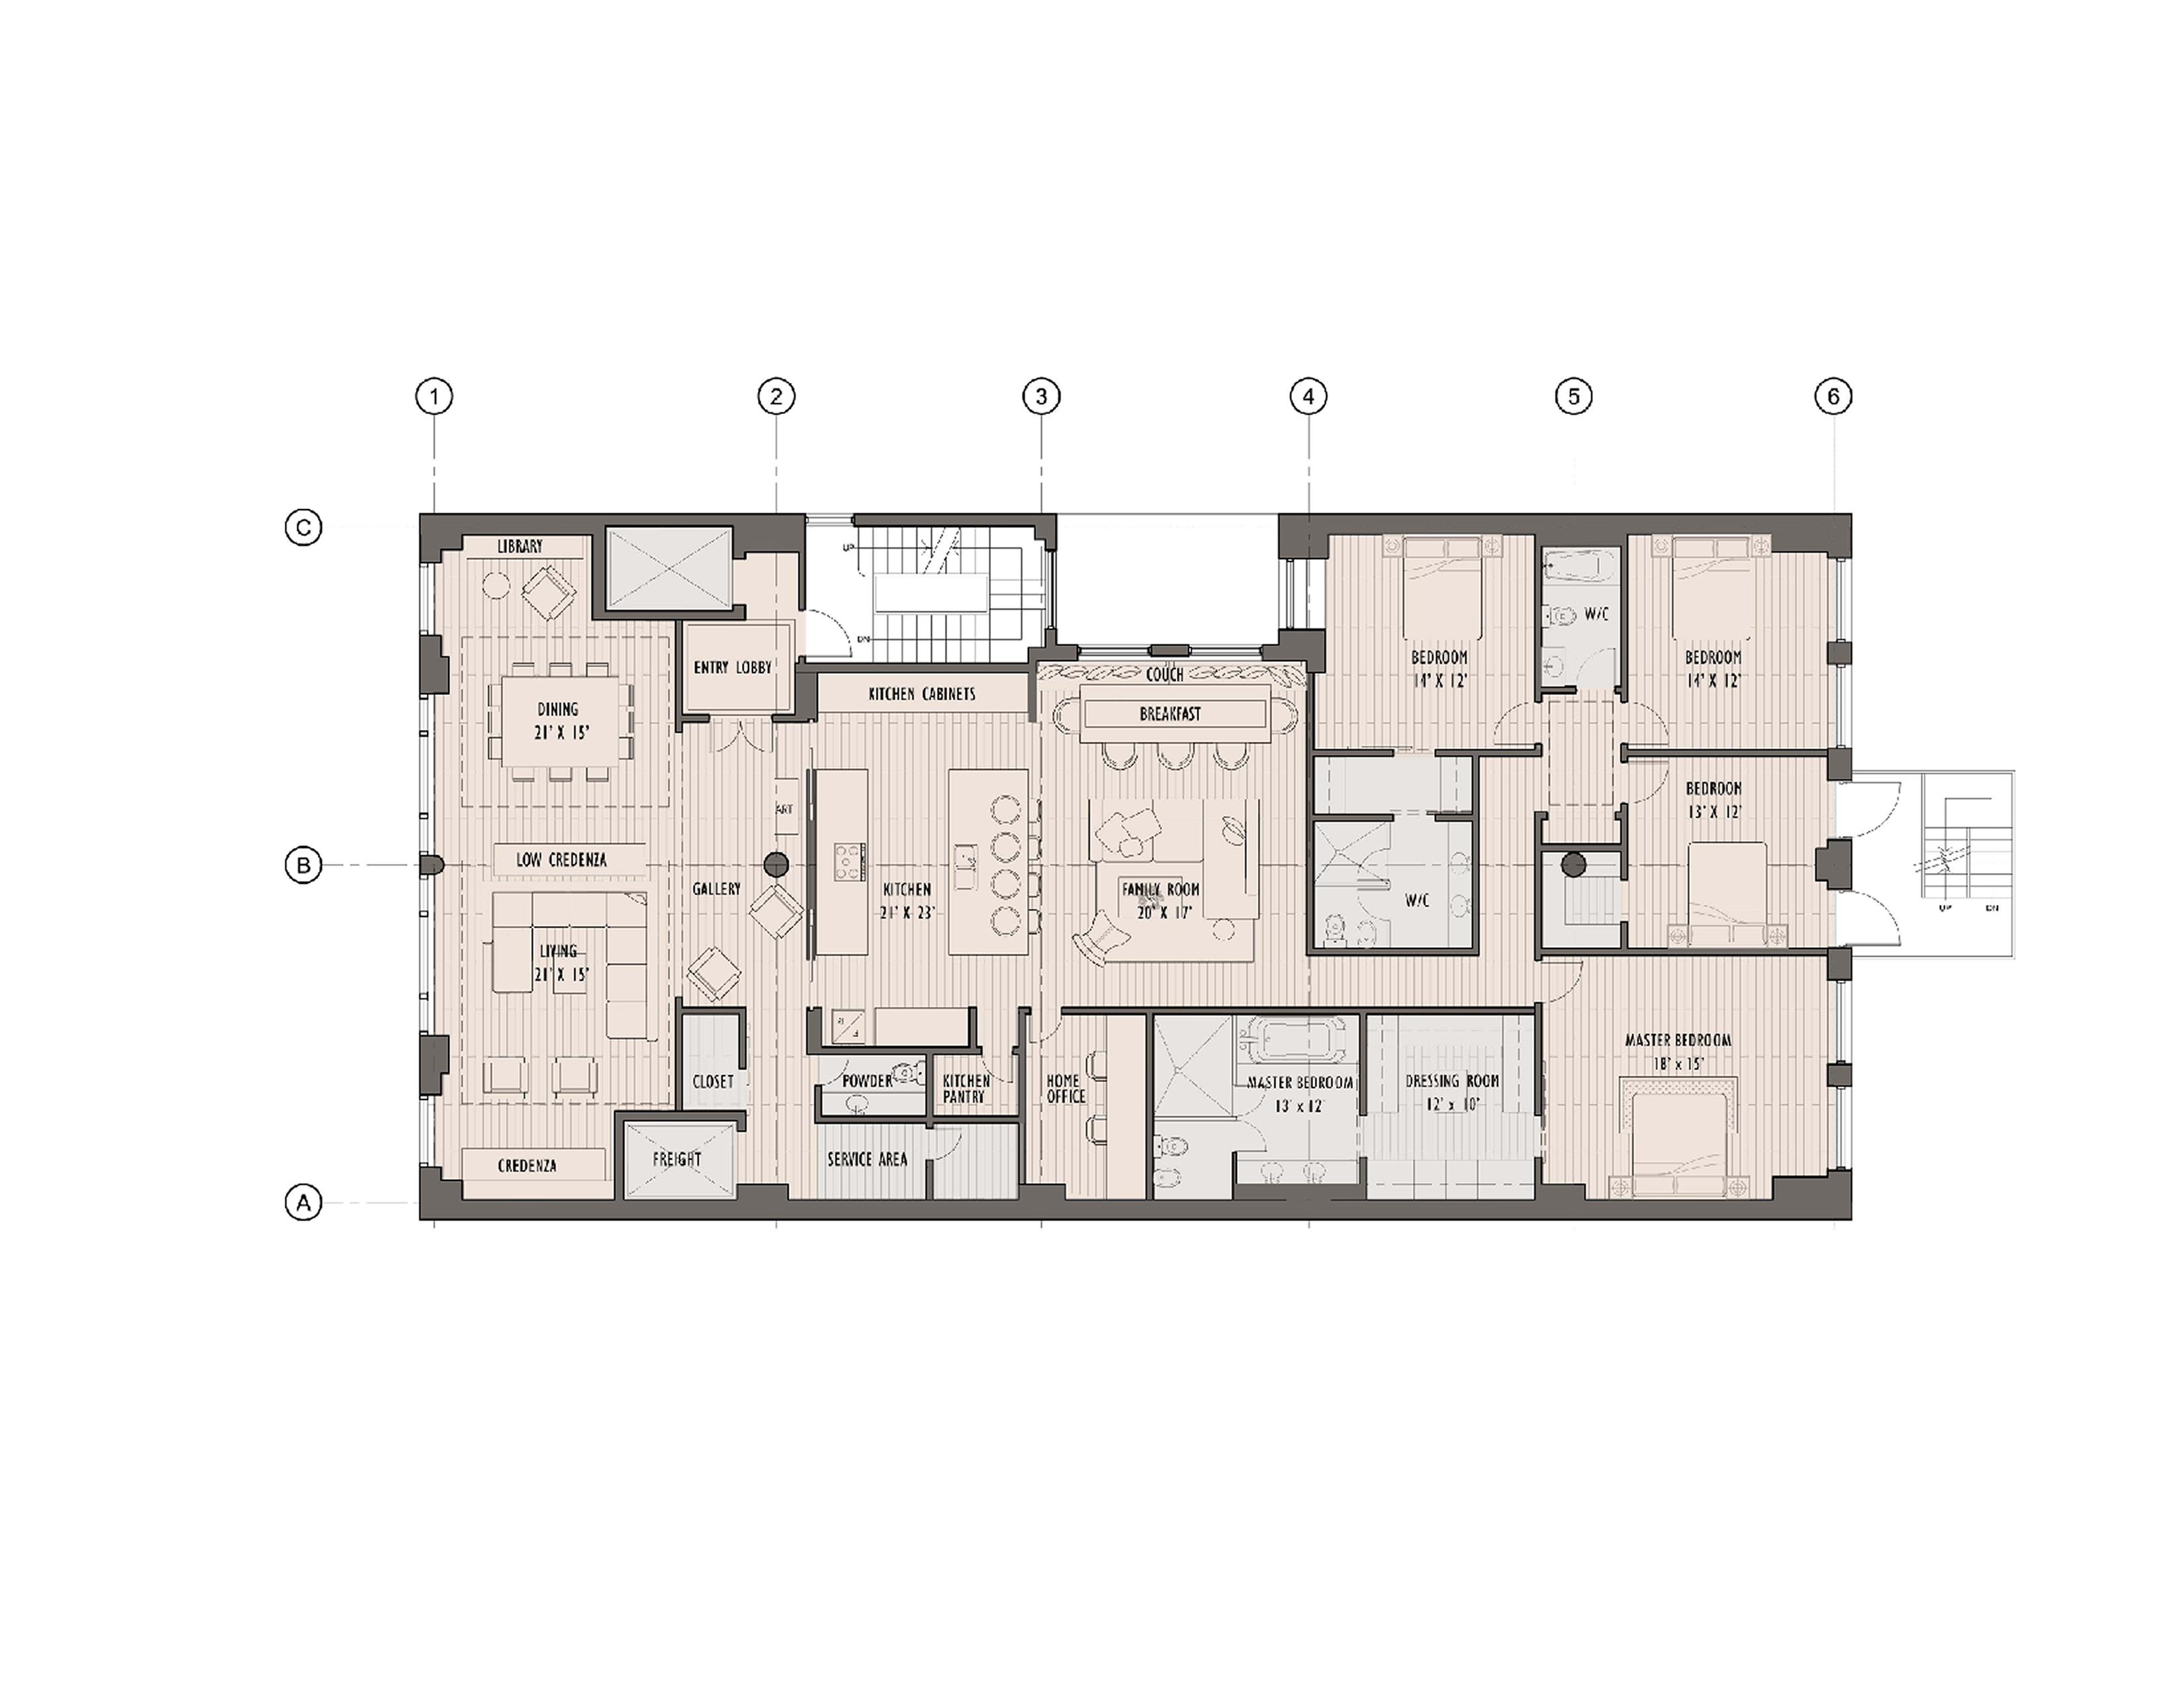 Floorplan for 25 East 21st Street, LOFT-3